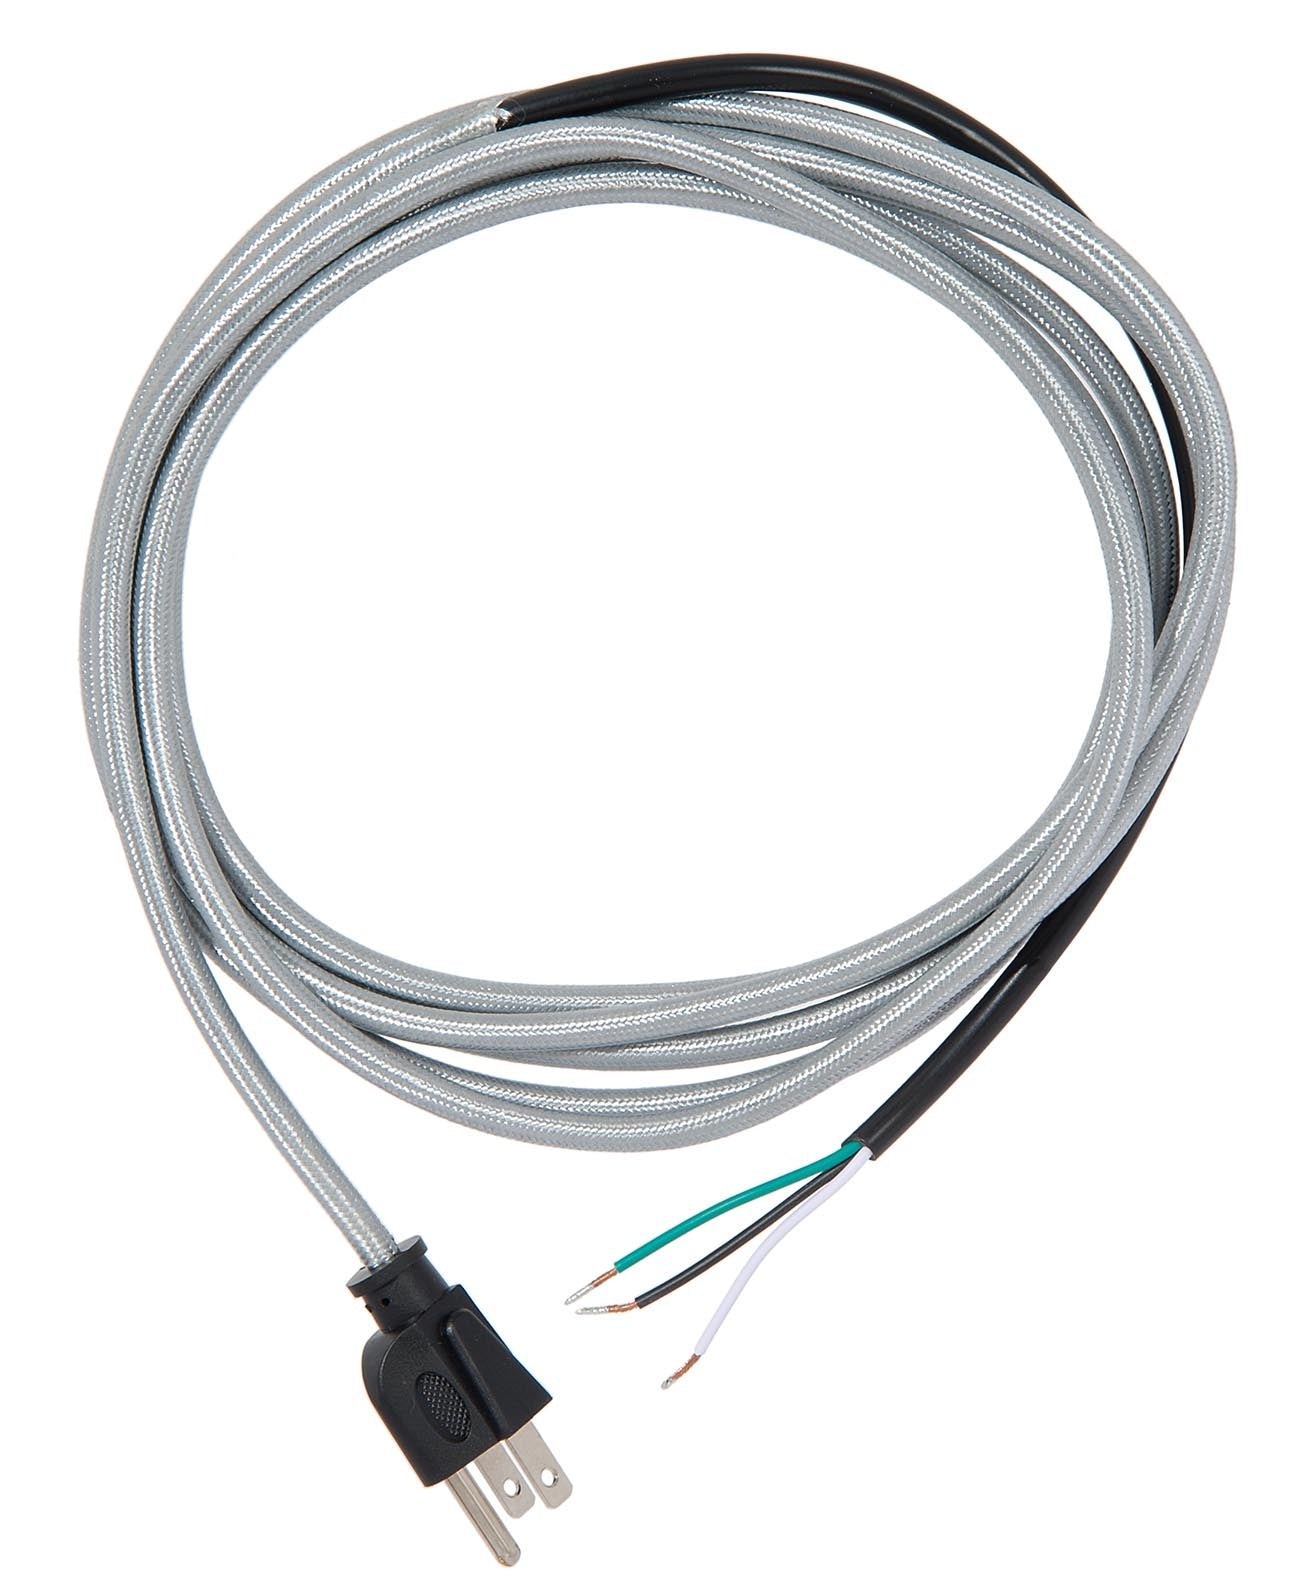 10-1/2 Ft. Silver Rayon Lamp Cord Set with 3-Prong Molded Plug, SVT-3